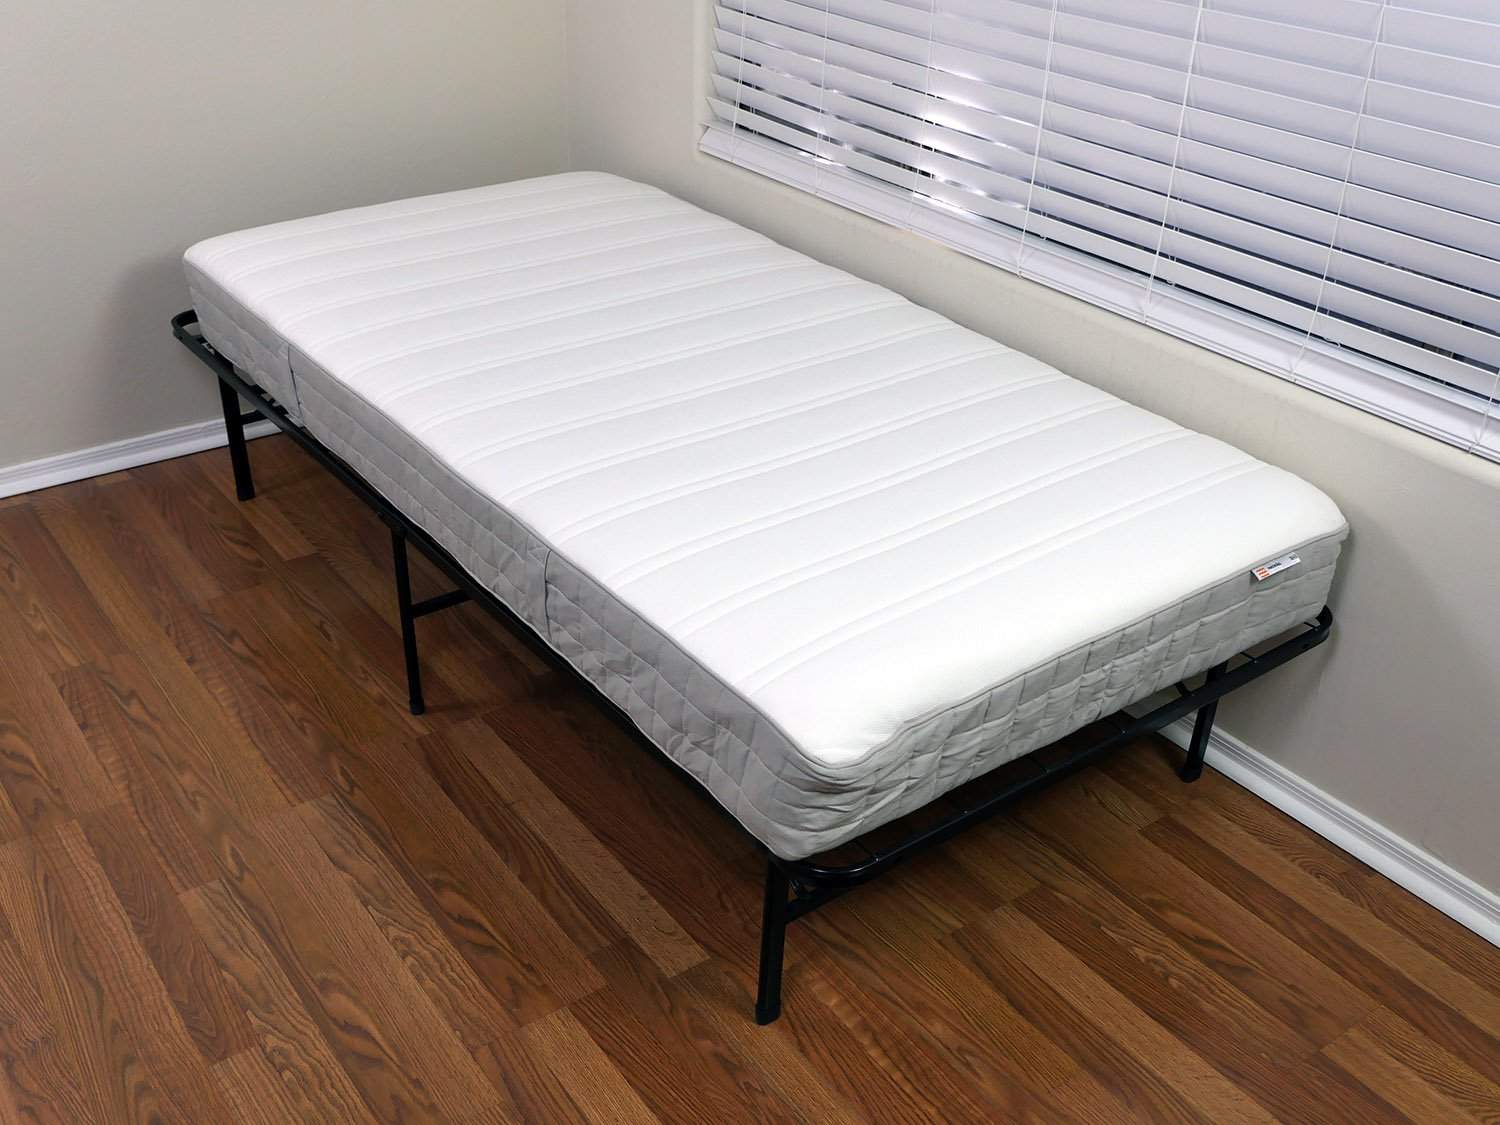 hasvag ikea mattress review